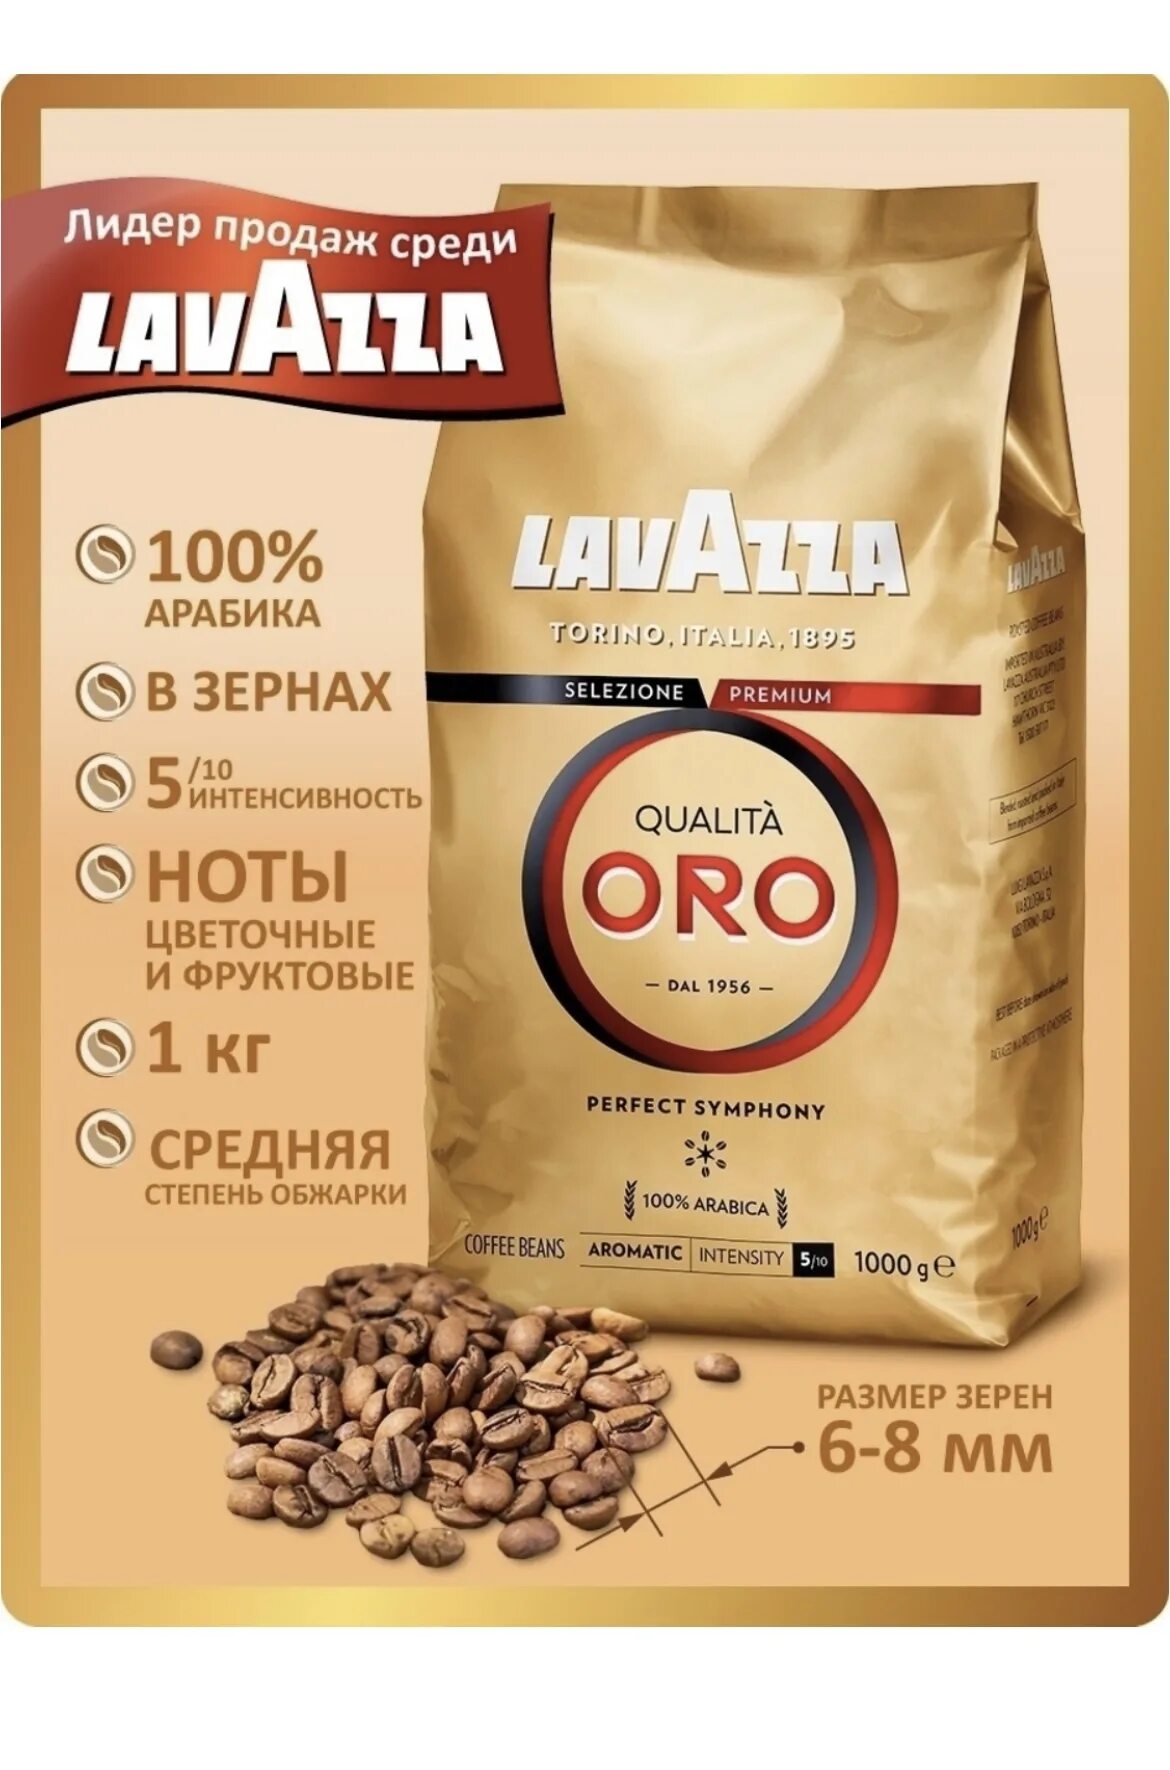 Lavazza oro кофе в зернах 1 кг. Кофе Lavazza Oro в зернах. Кофе Лавацца Оро 1 кг. Lavazza qualita Oro 1 кг. Кофе в зернах Lavazza Oro 1 кг.